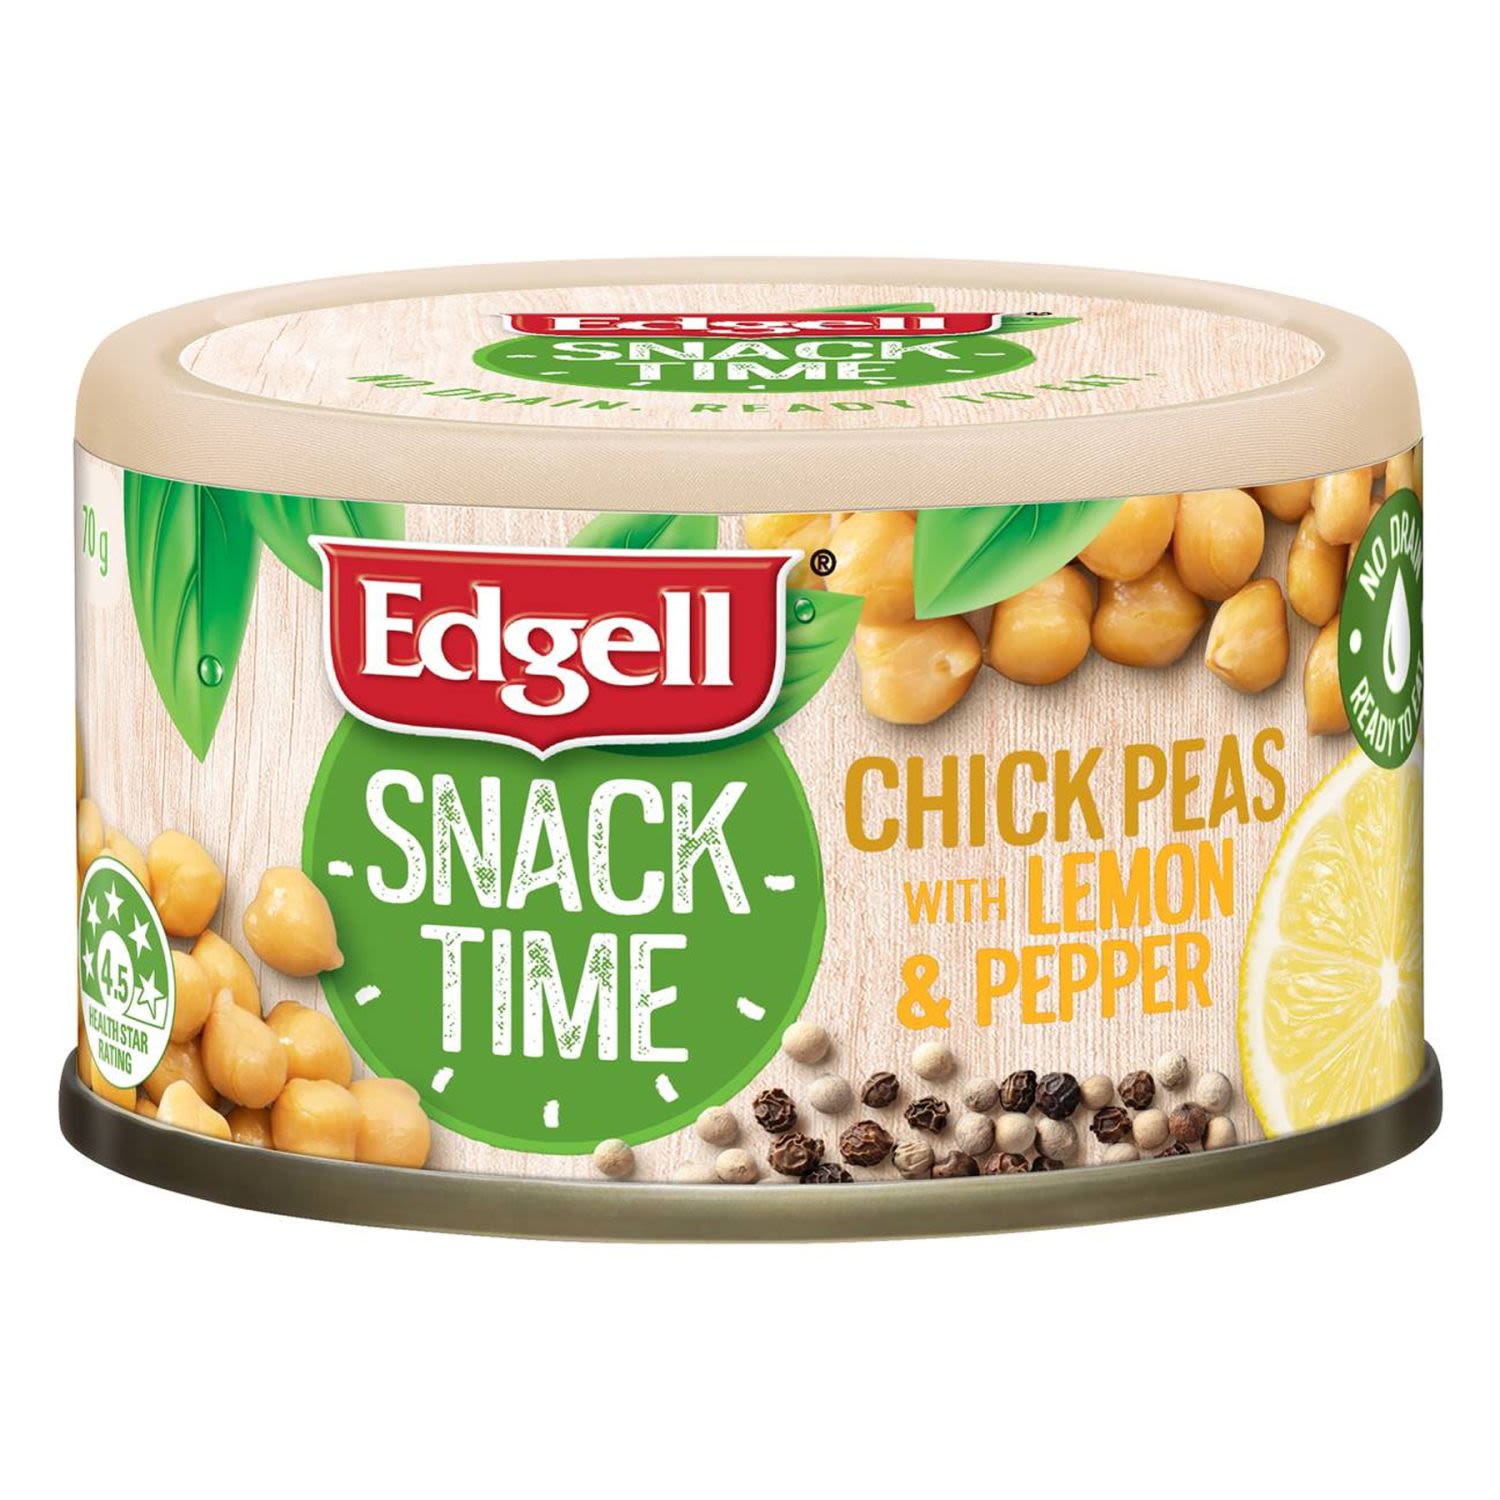 Edgell Snack Time Chick Peas With Lemon & Pepper, 70 Gram